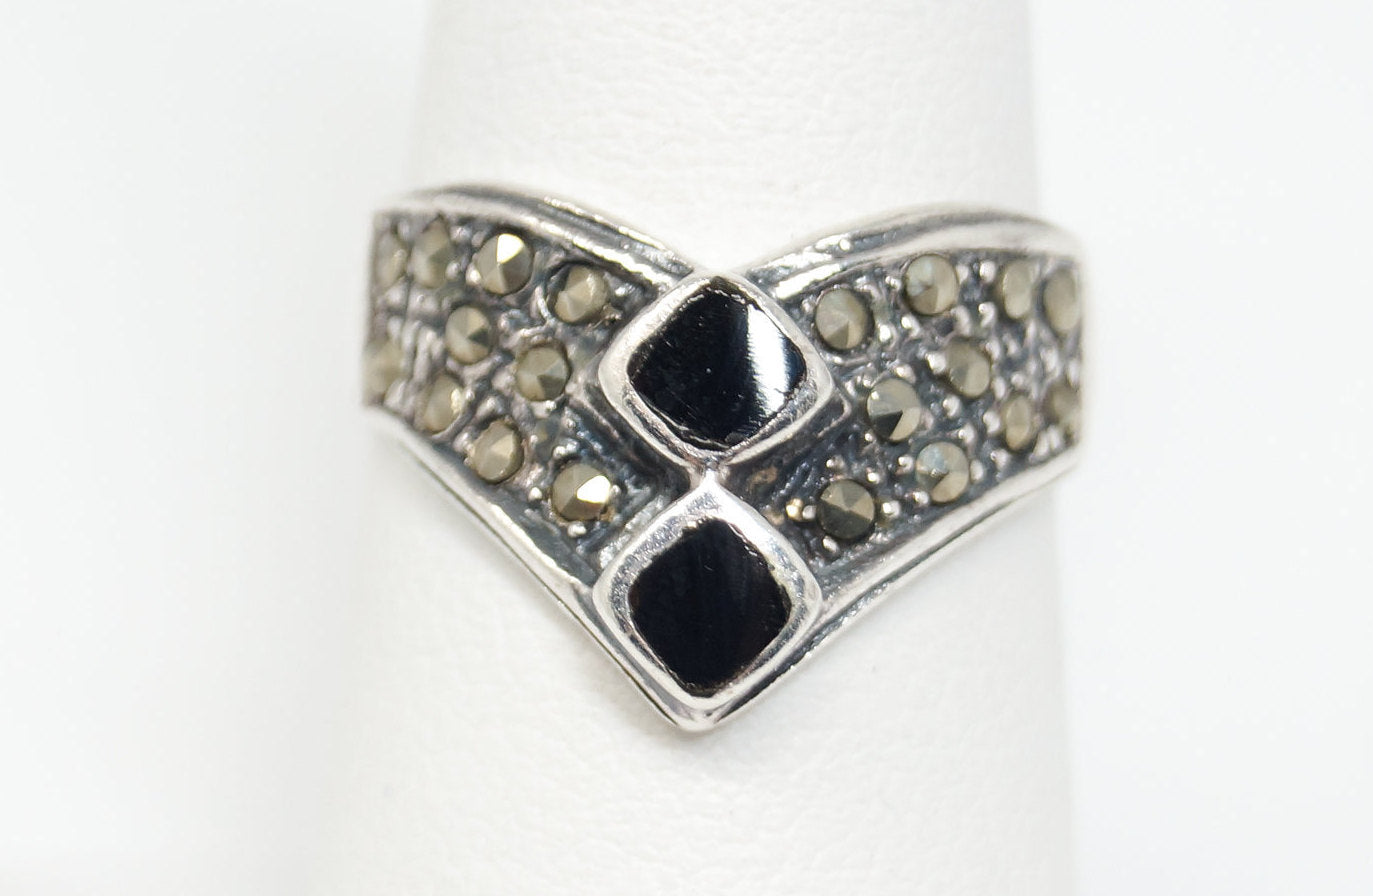 Vtg Art Deco Style Marcasite Black Onyx Ring Sterling Silver - Sz 6.75